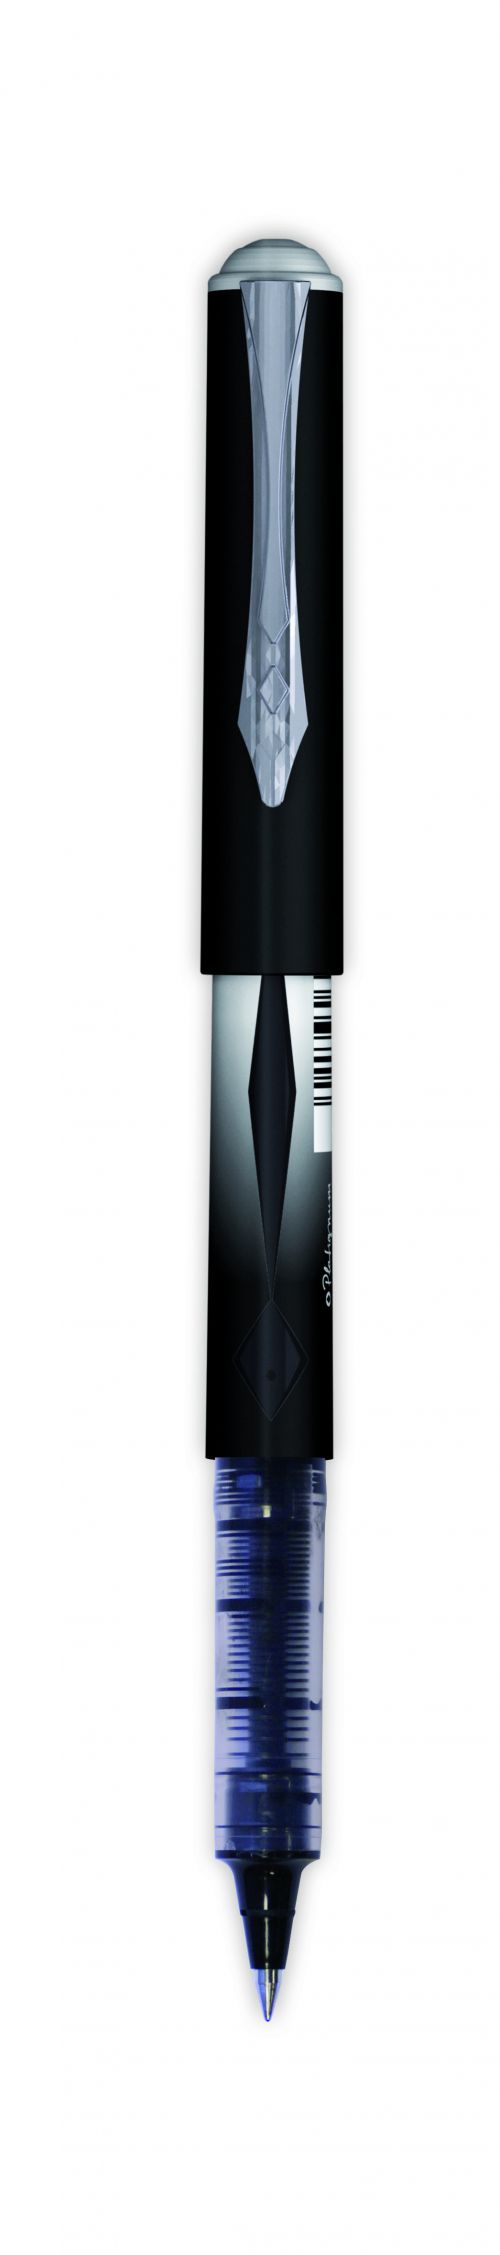 Snopake Tixx Rollerball Pen Cone Point Medium 0.5mm Black 50458 [Pack 12]